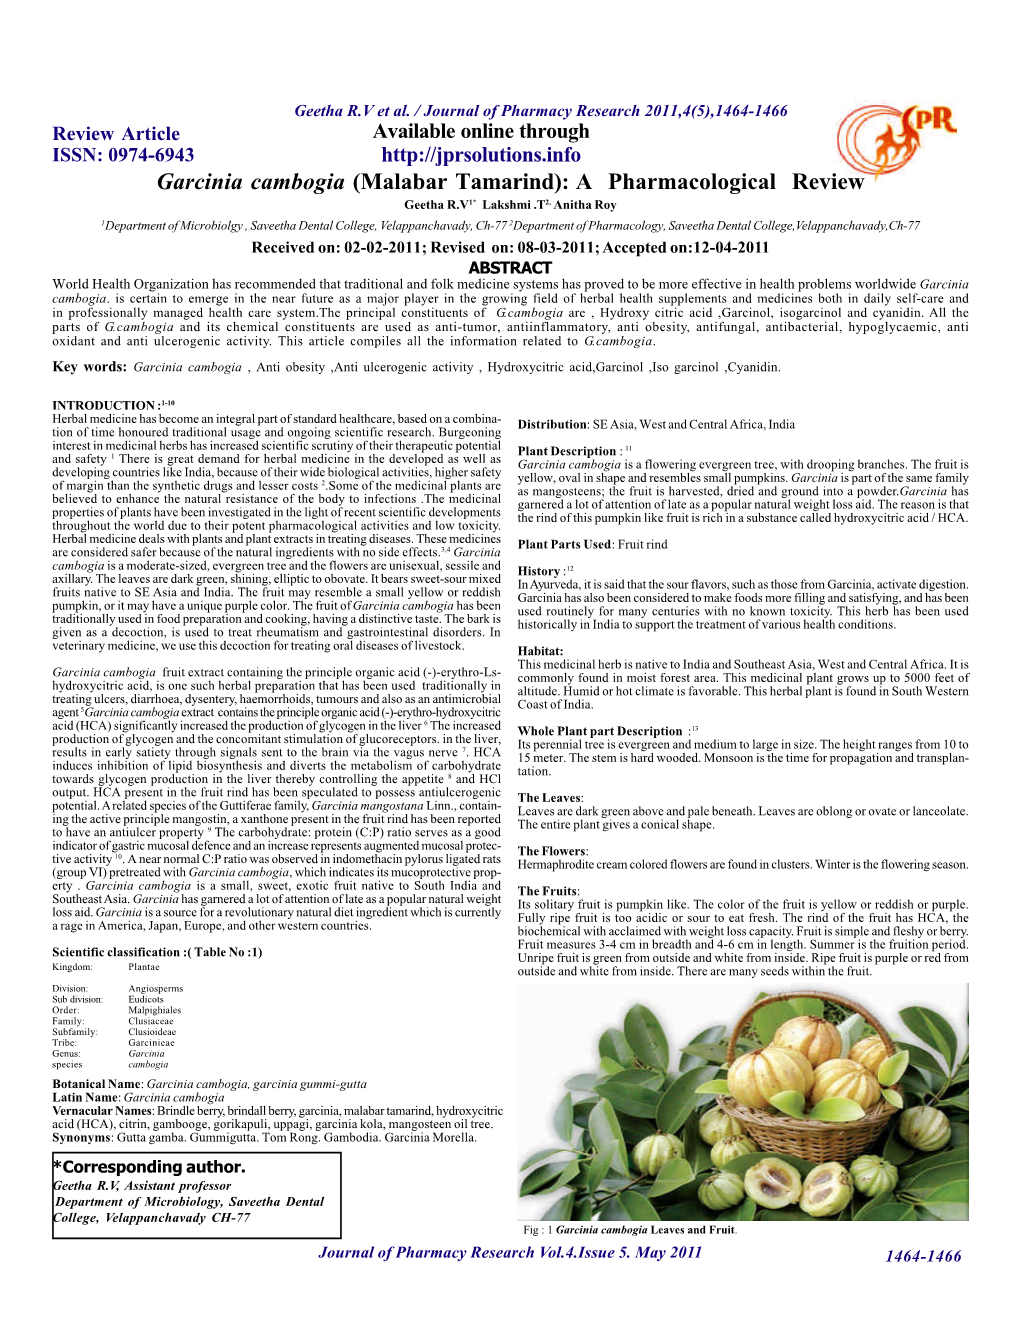 Garcinia Cambogia (Malabar Tamarind)